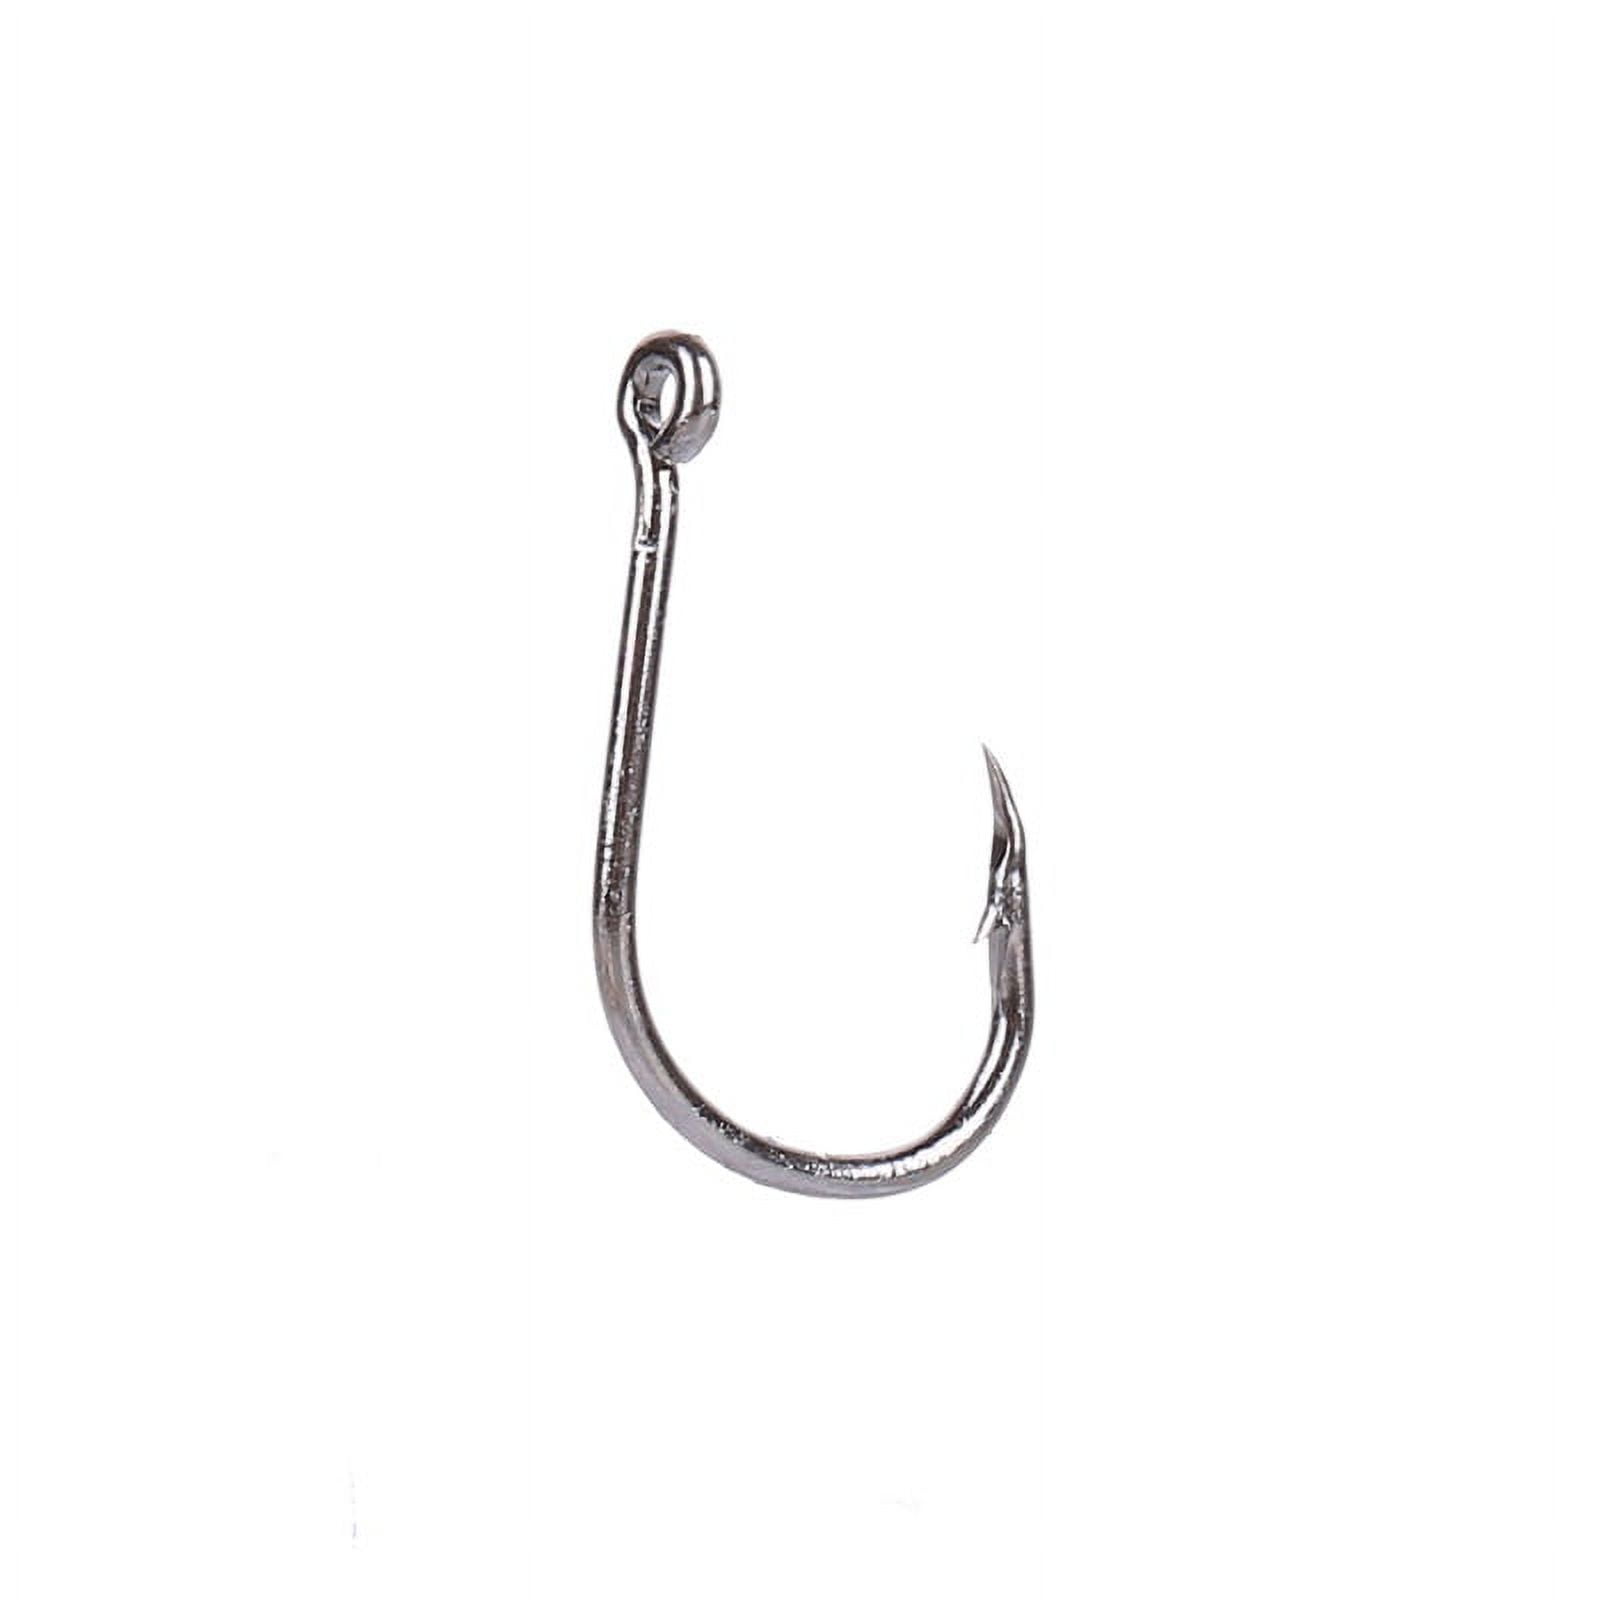 100pcs High Carbon Steel Fishing Hooks Holder Fish Bait Hook, Size: 6